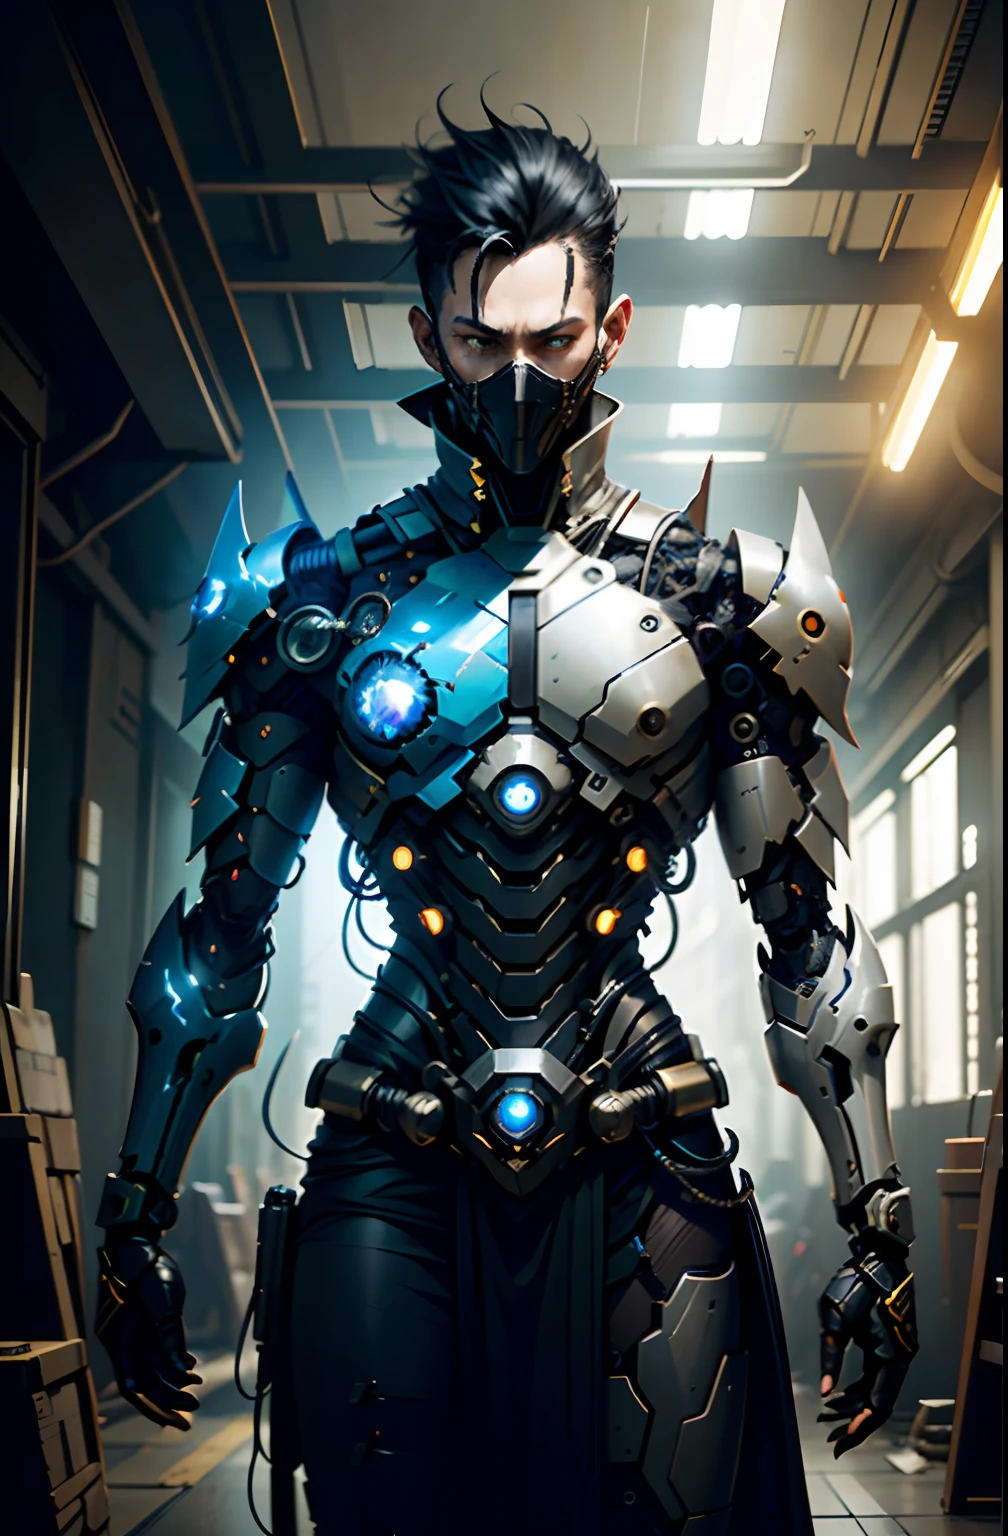 Dark_Fantasy、cyberpunked、(Double Sword、Scorpion Cyborg Man、Das Veilchen:1.1)、1man、Mechanical technology、Robot Presence、Ninja-like fighting stance、Cybernetic Guardian、